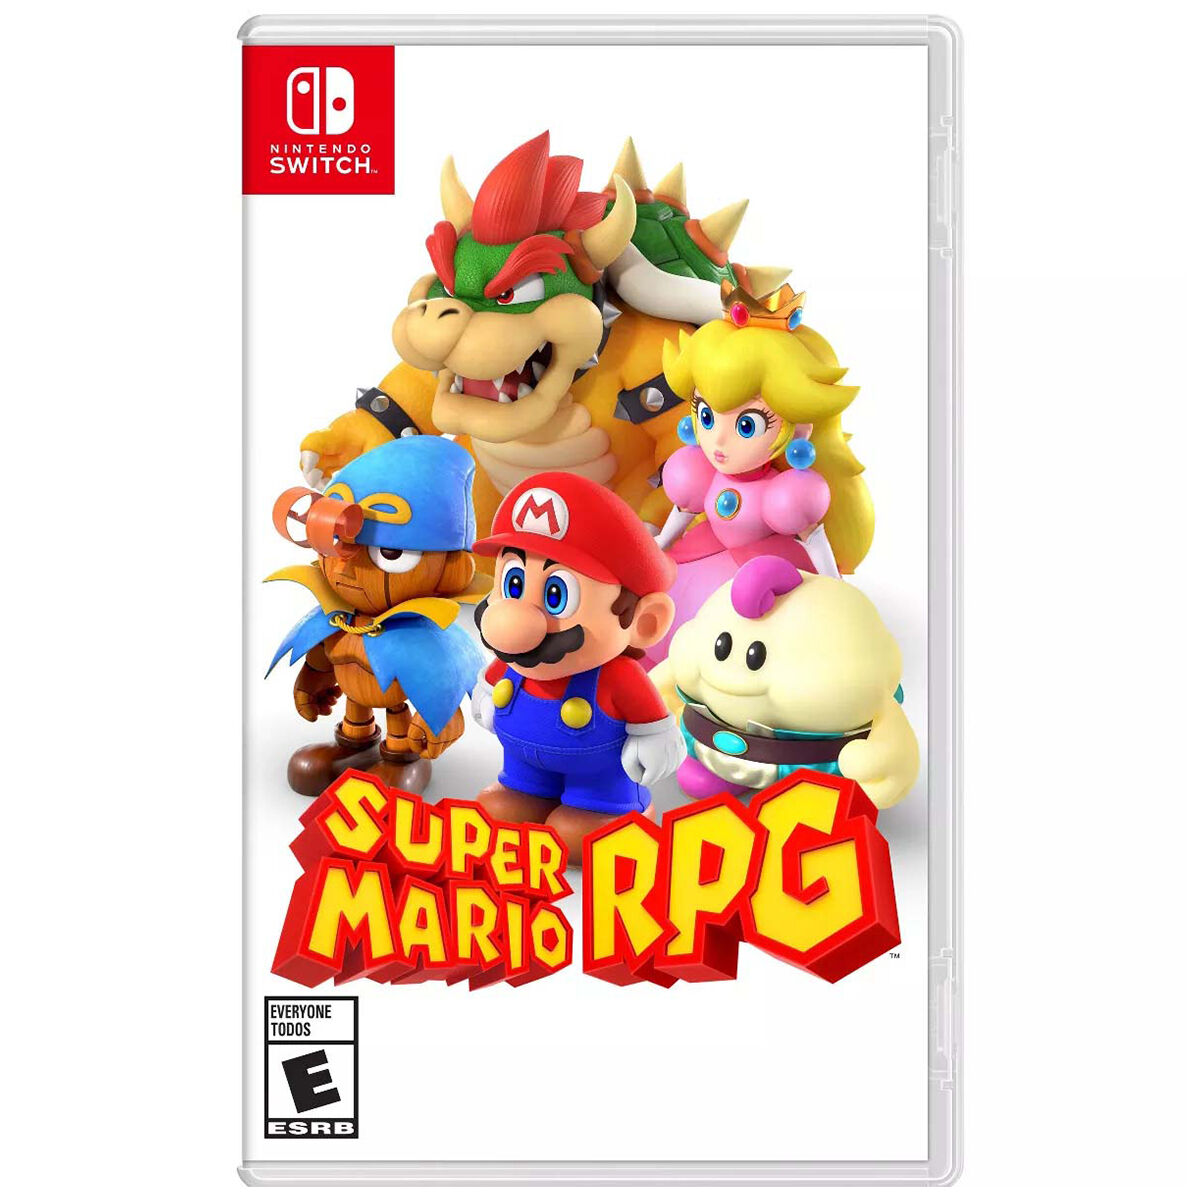 Super Mario Bros RPG for Nintendo Switch | P.C. Richard & Son